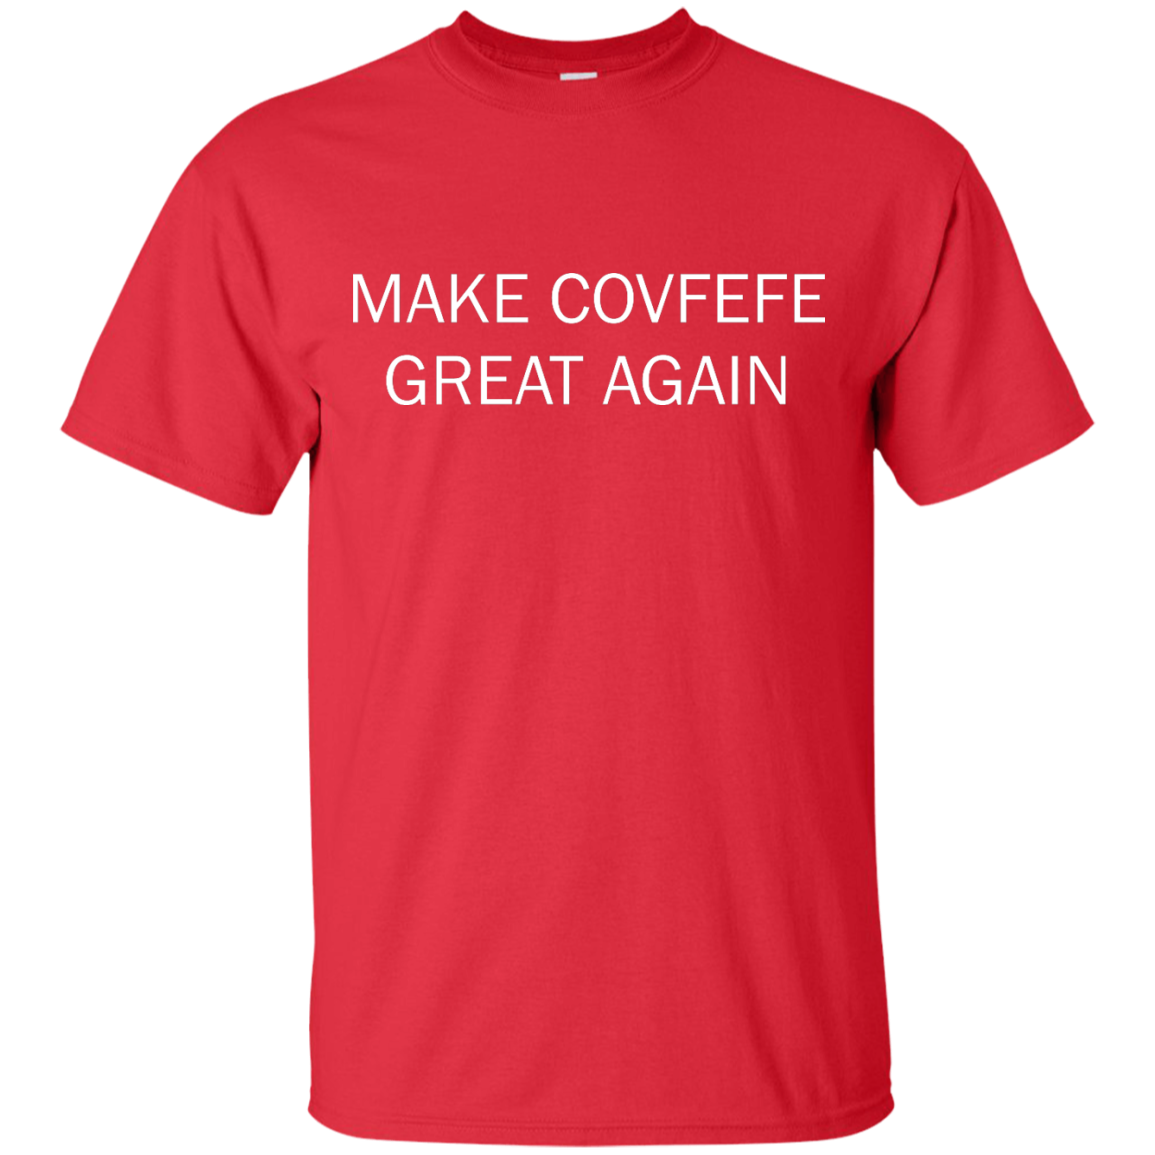 Make Covfefe Great Again shirt, tank, sweater